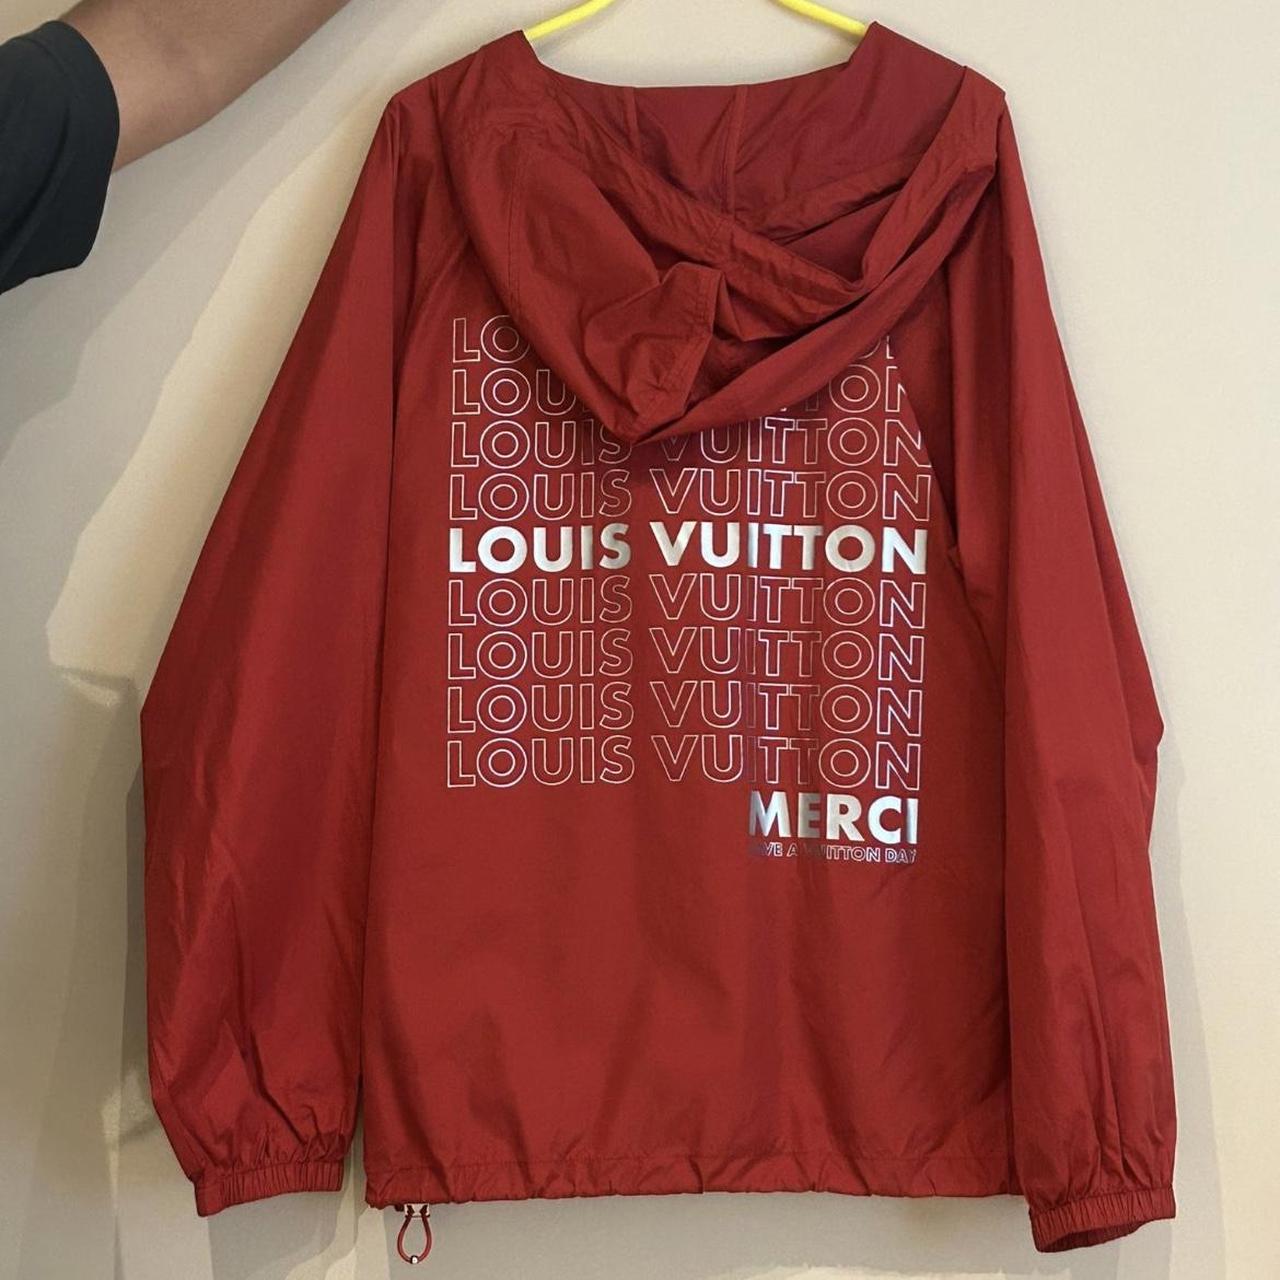 JIWISSI'S 2020 Angora LV (Louis Vuitton) Fur Coat - Depop